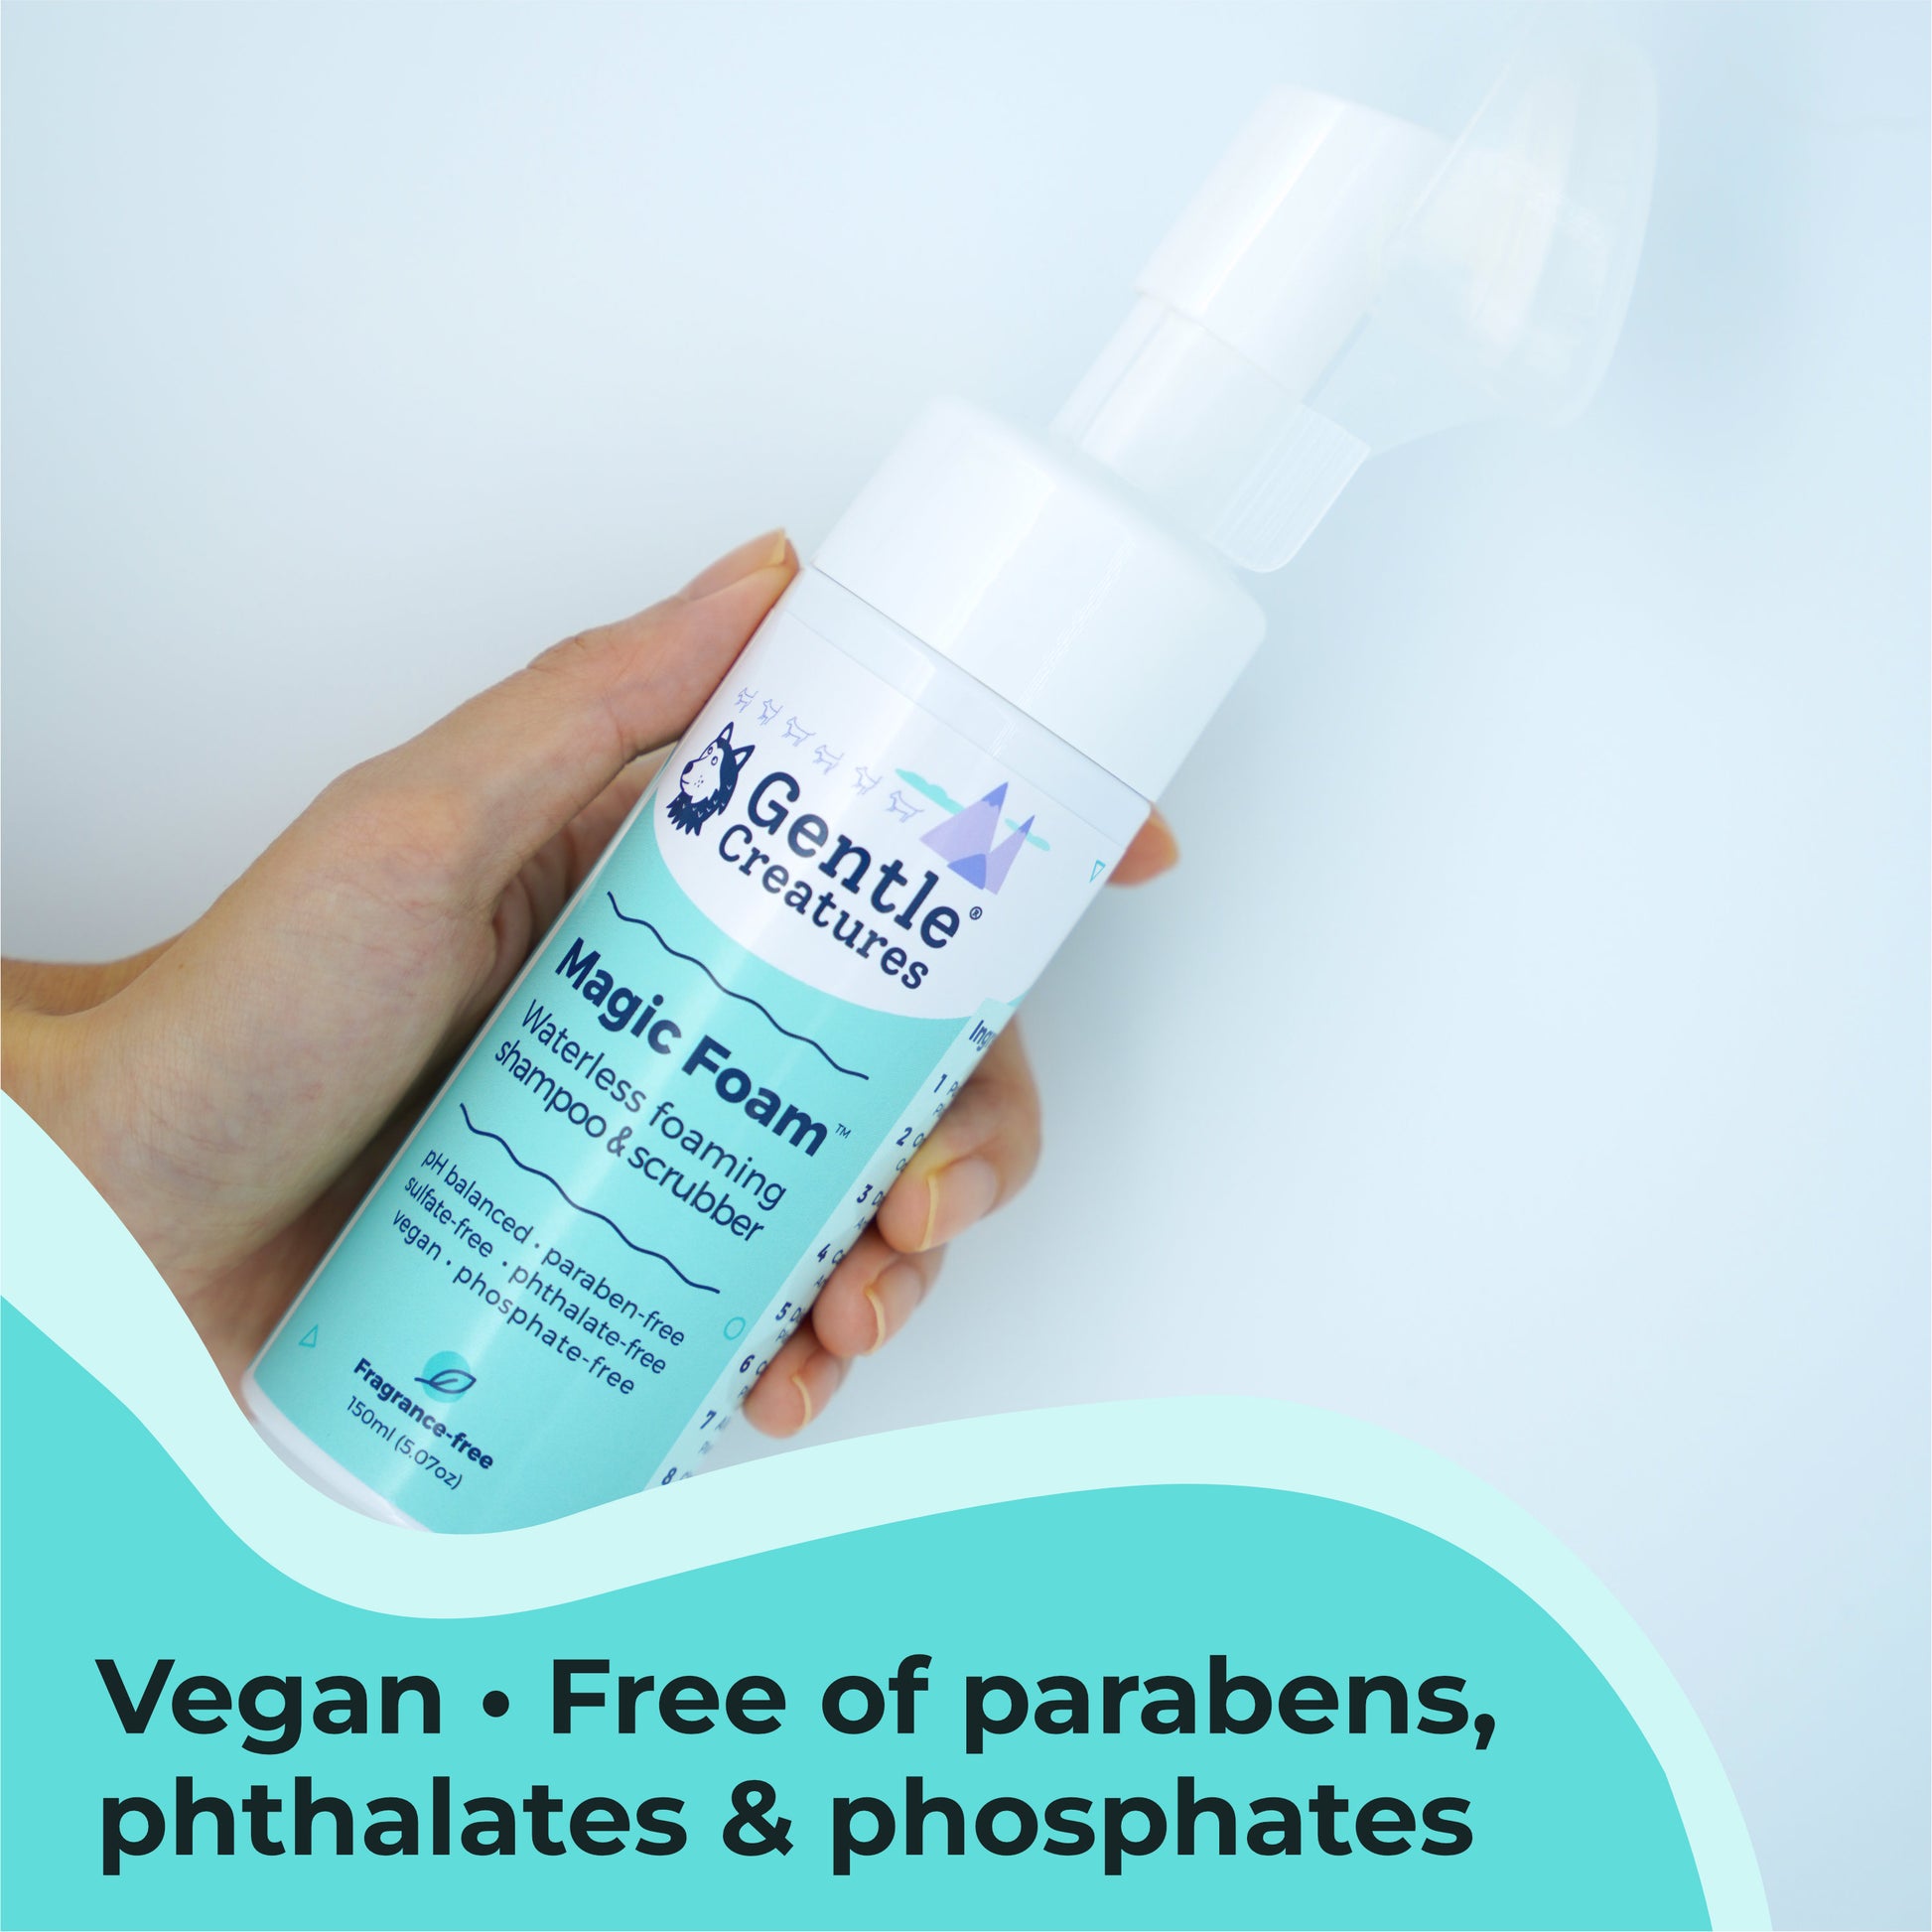 Vegan - Free of parabens, phthalates and phosphates